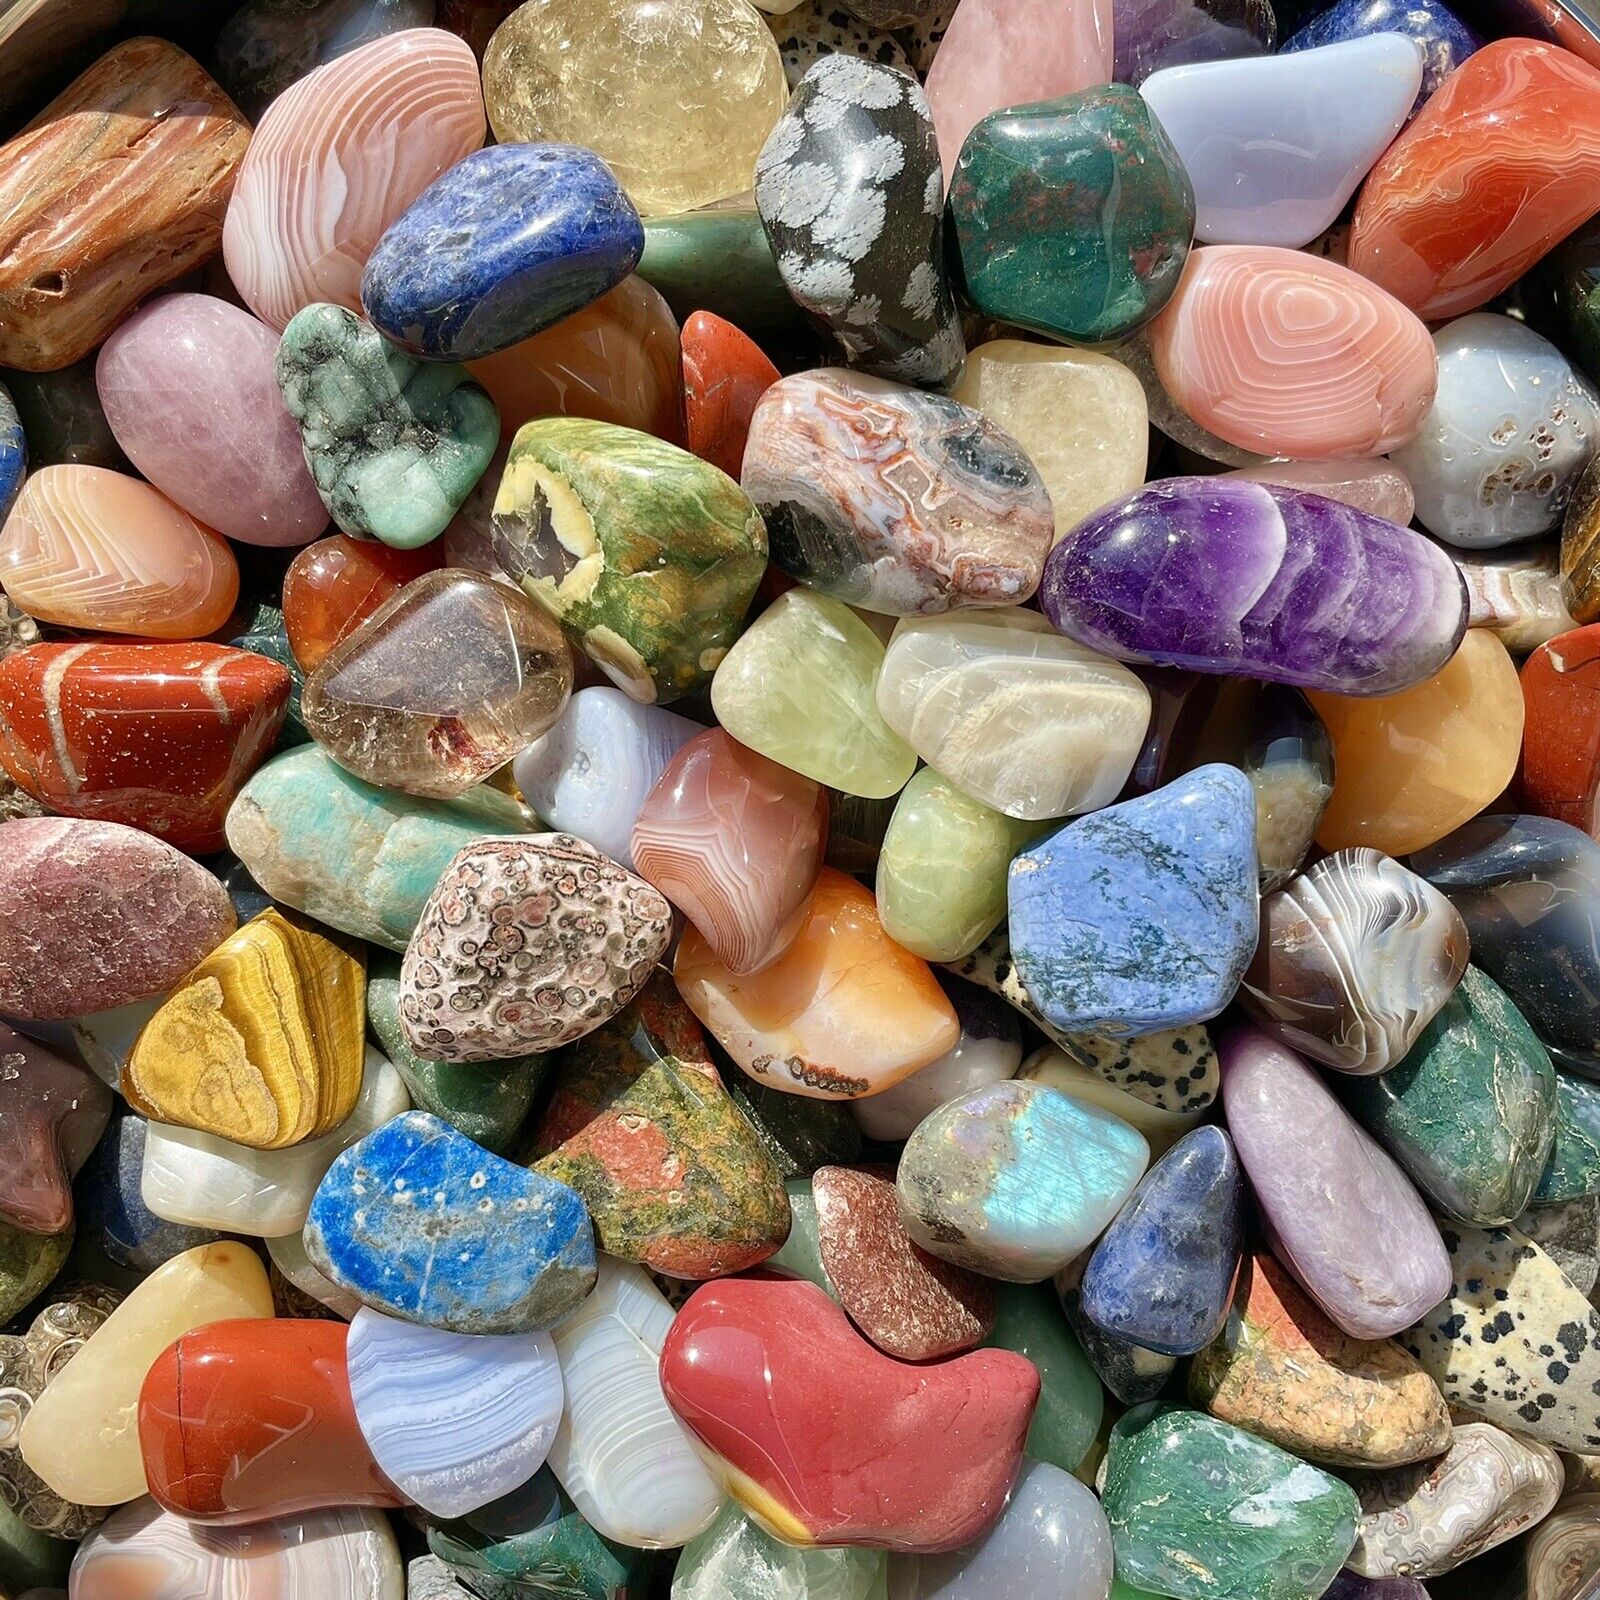 2lb JUMBO Mixed Polished Rocks - Tumbled Stones Gemstone Lot - Healing and Reiki